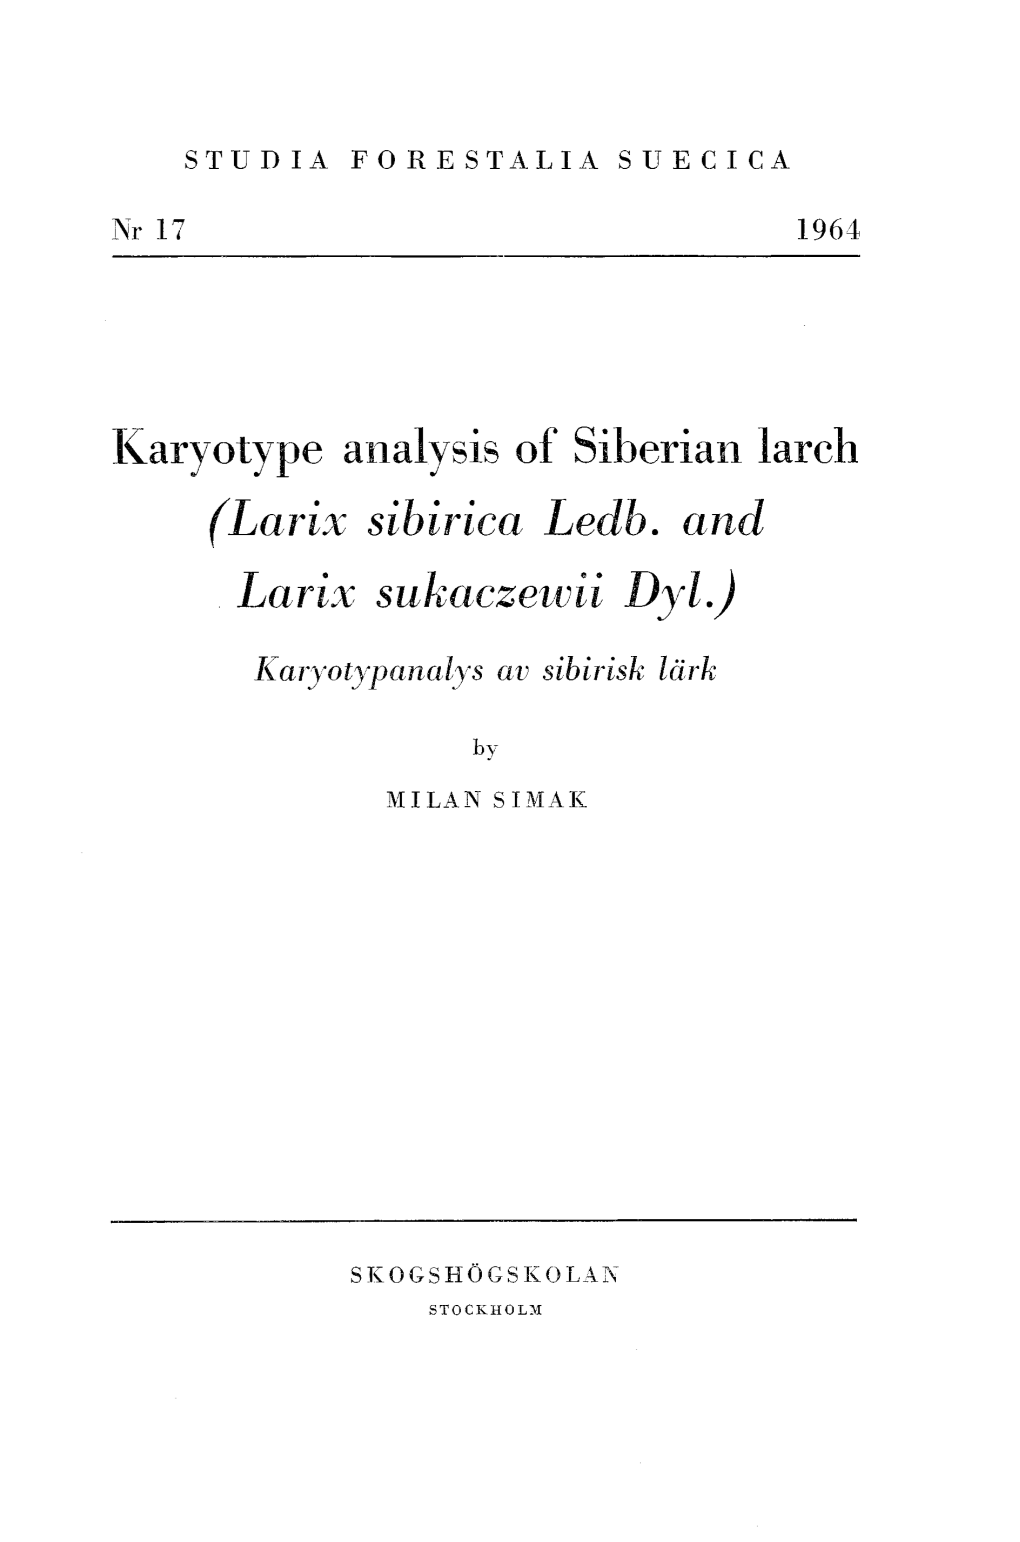 Icary Oty E Analysis of Siberian Larch